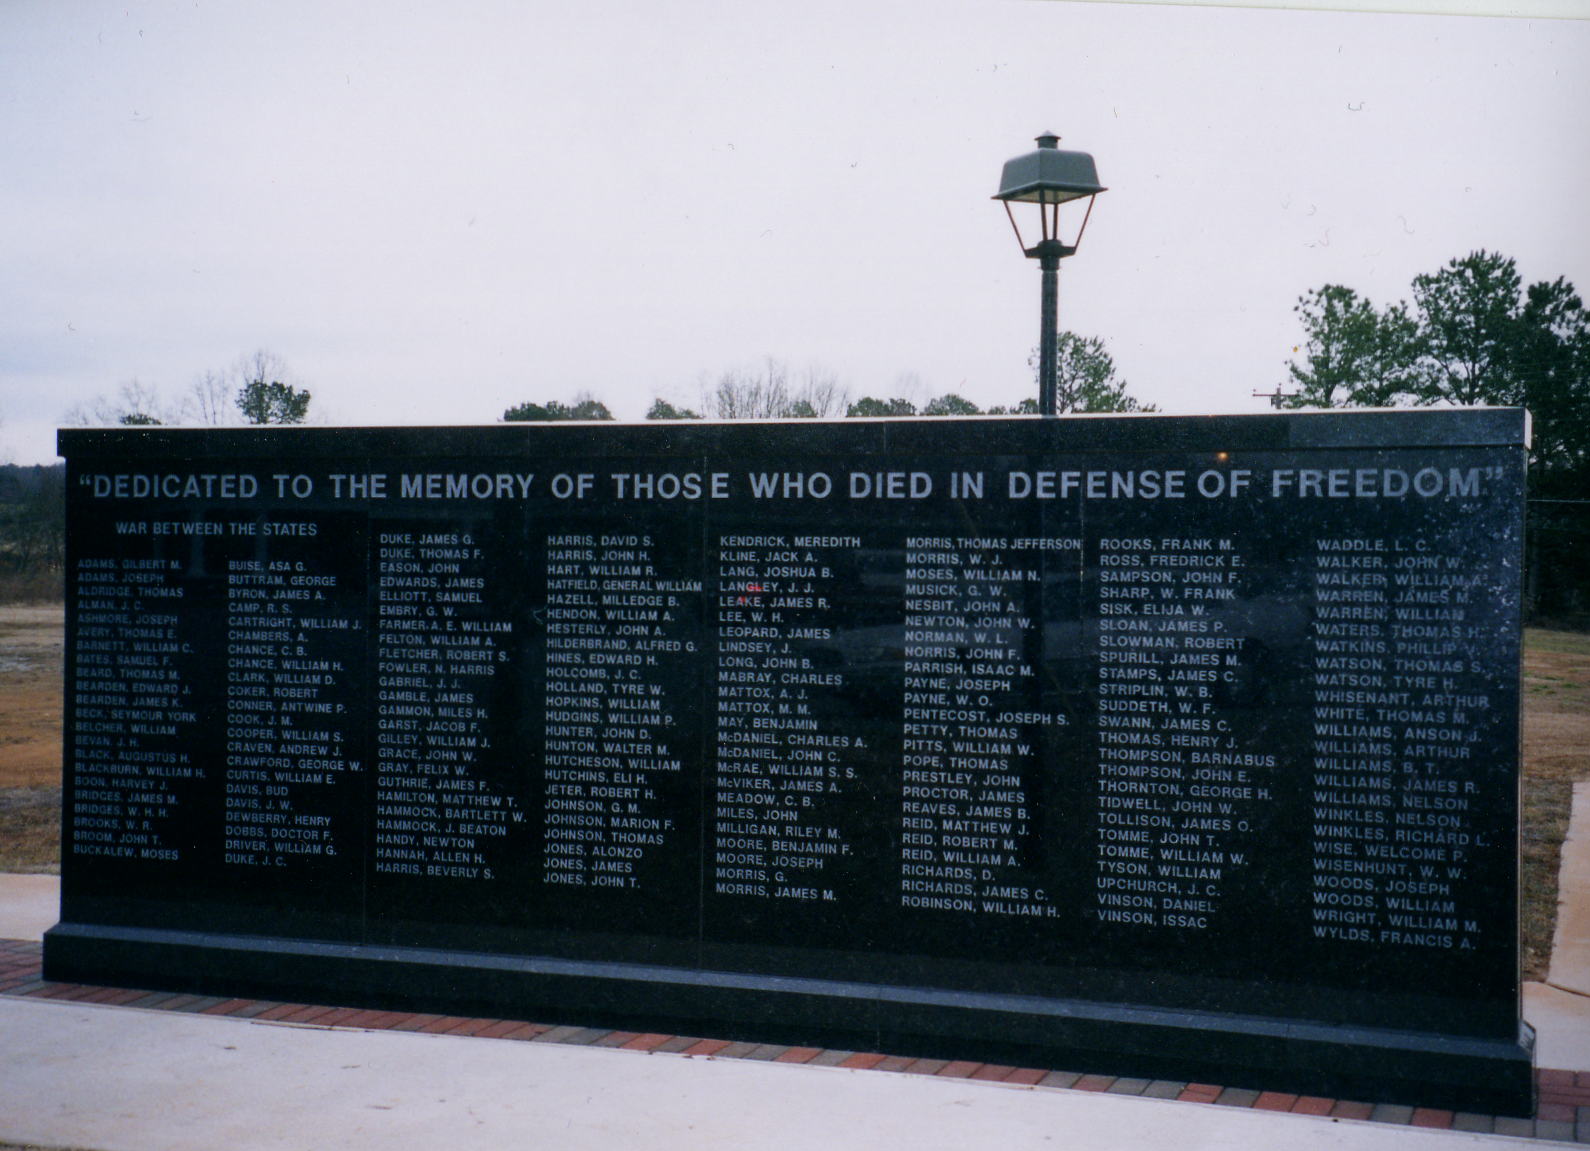 Carroll County Veterans Memorial Park Georgia Confederate Memorial Day Remembrance April 23 16